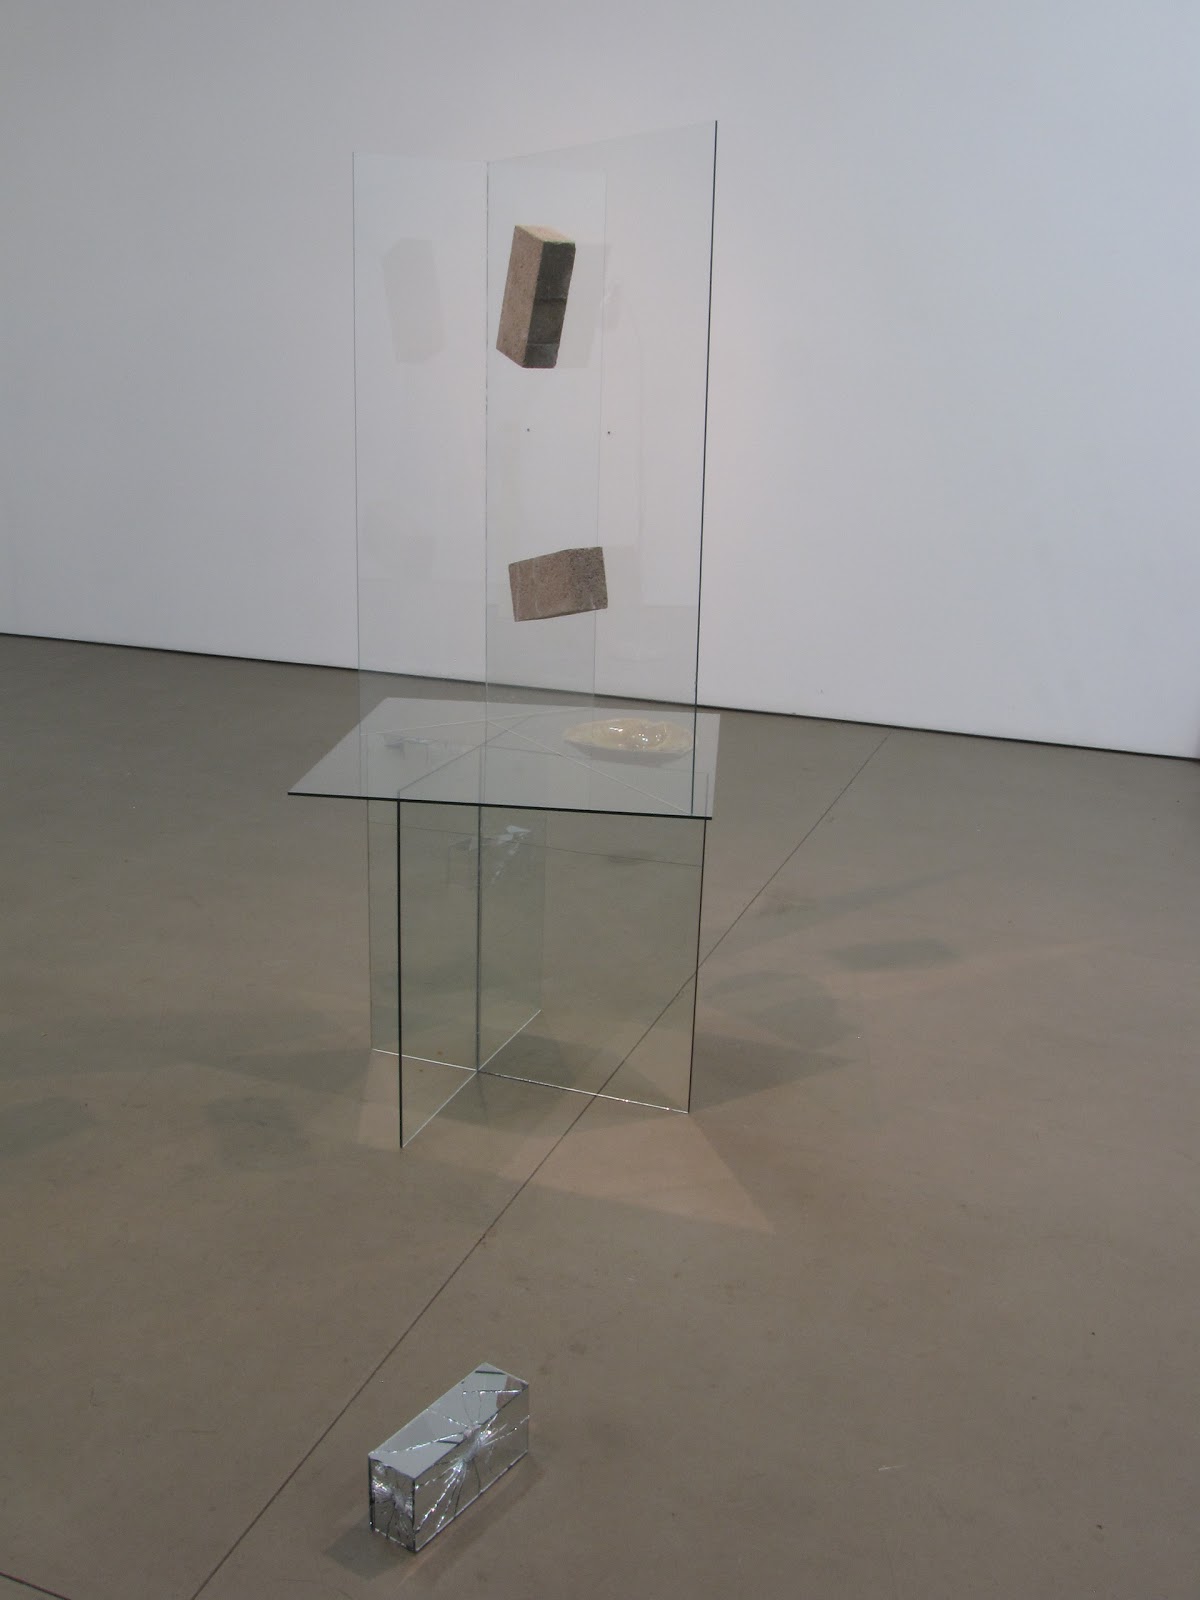   Architect , 60" x 22" x 24", transparent glass, mirror glass, found ashtray, concrete brick, silicon, 2010 